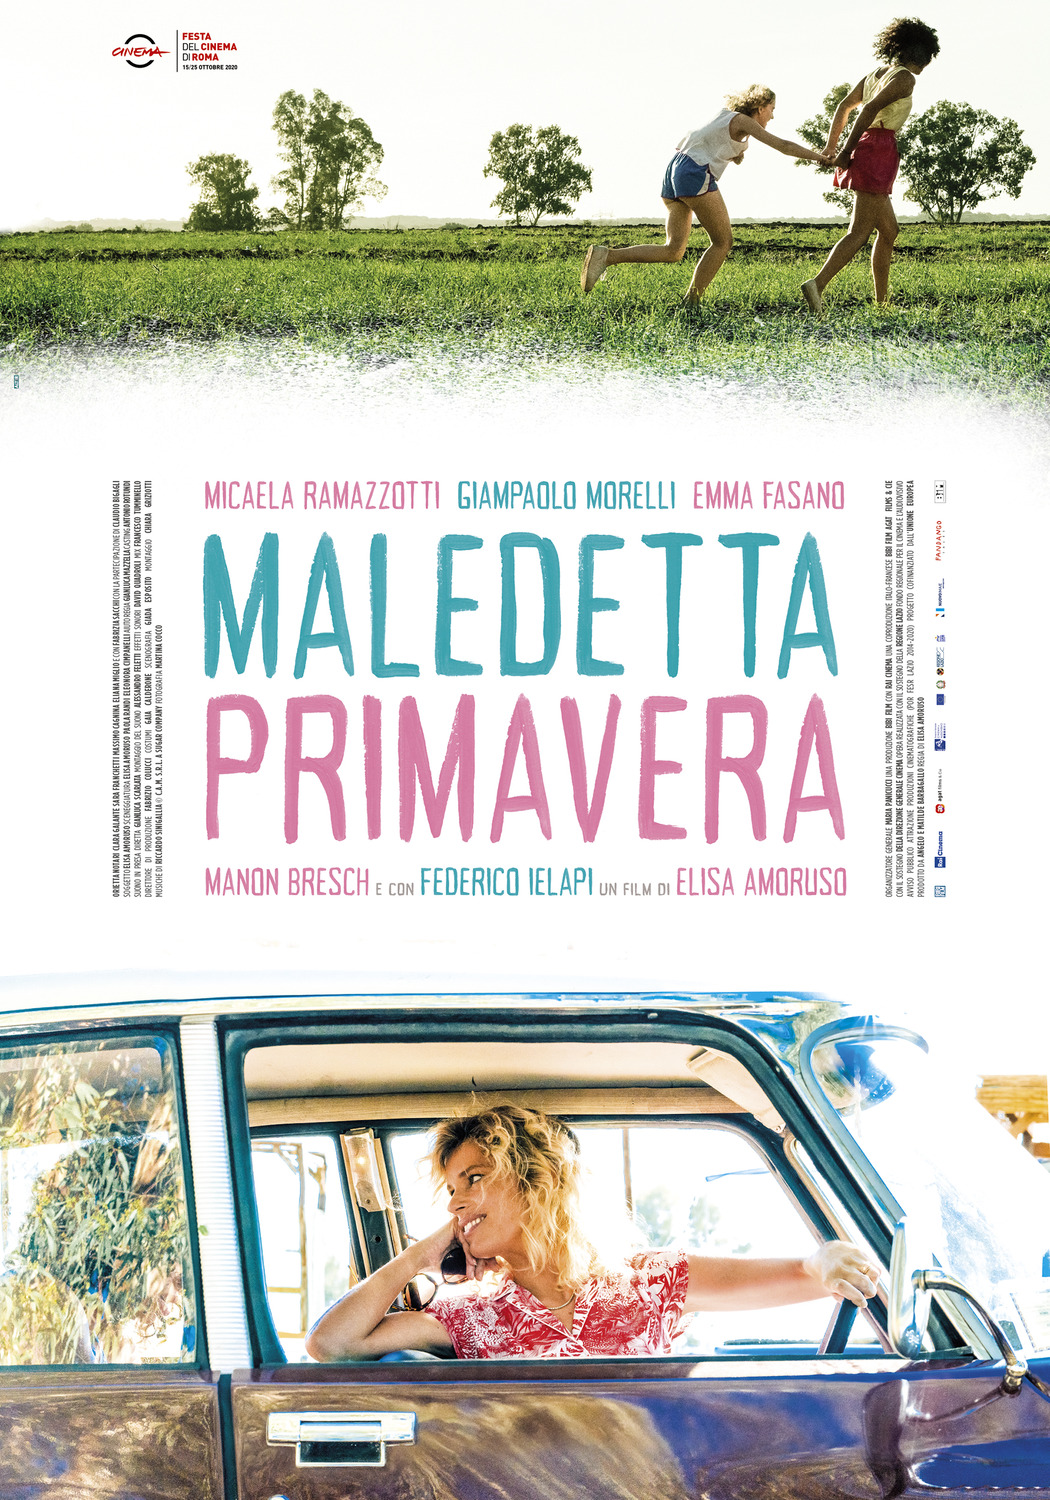 Extra Large Movie Poster Image for Maledetta primavera 